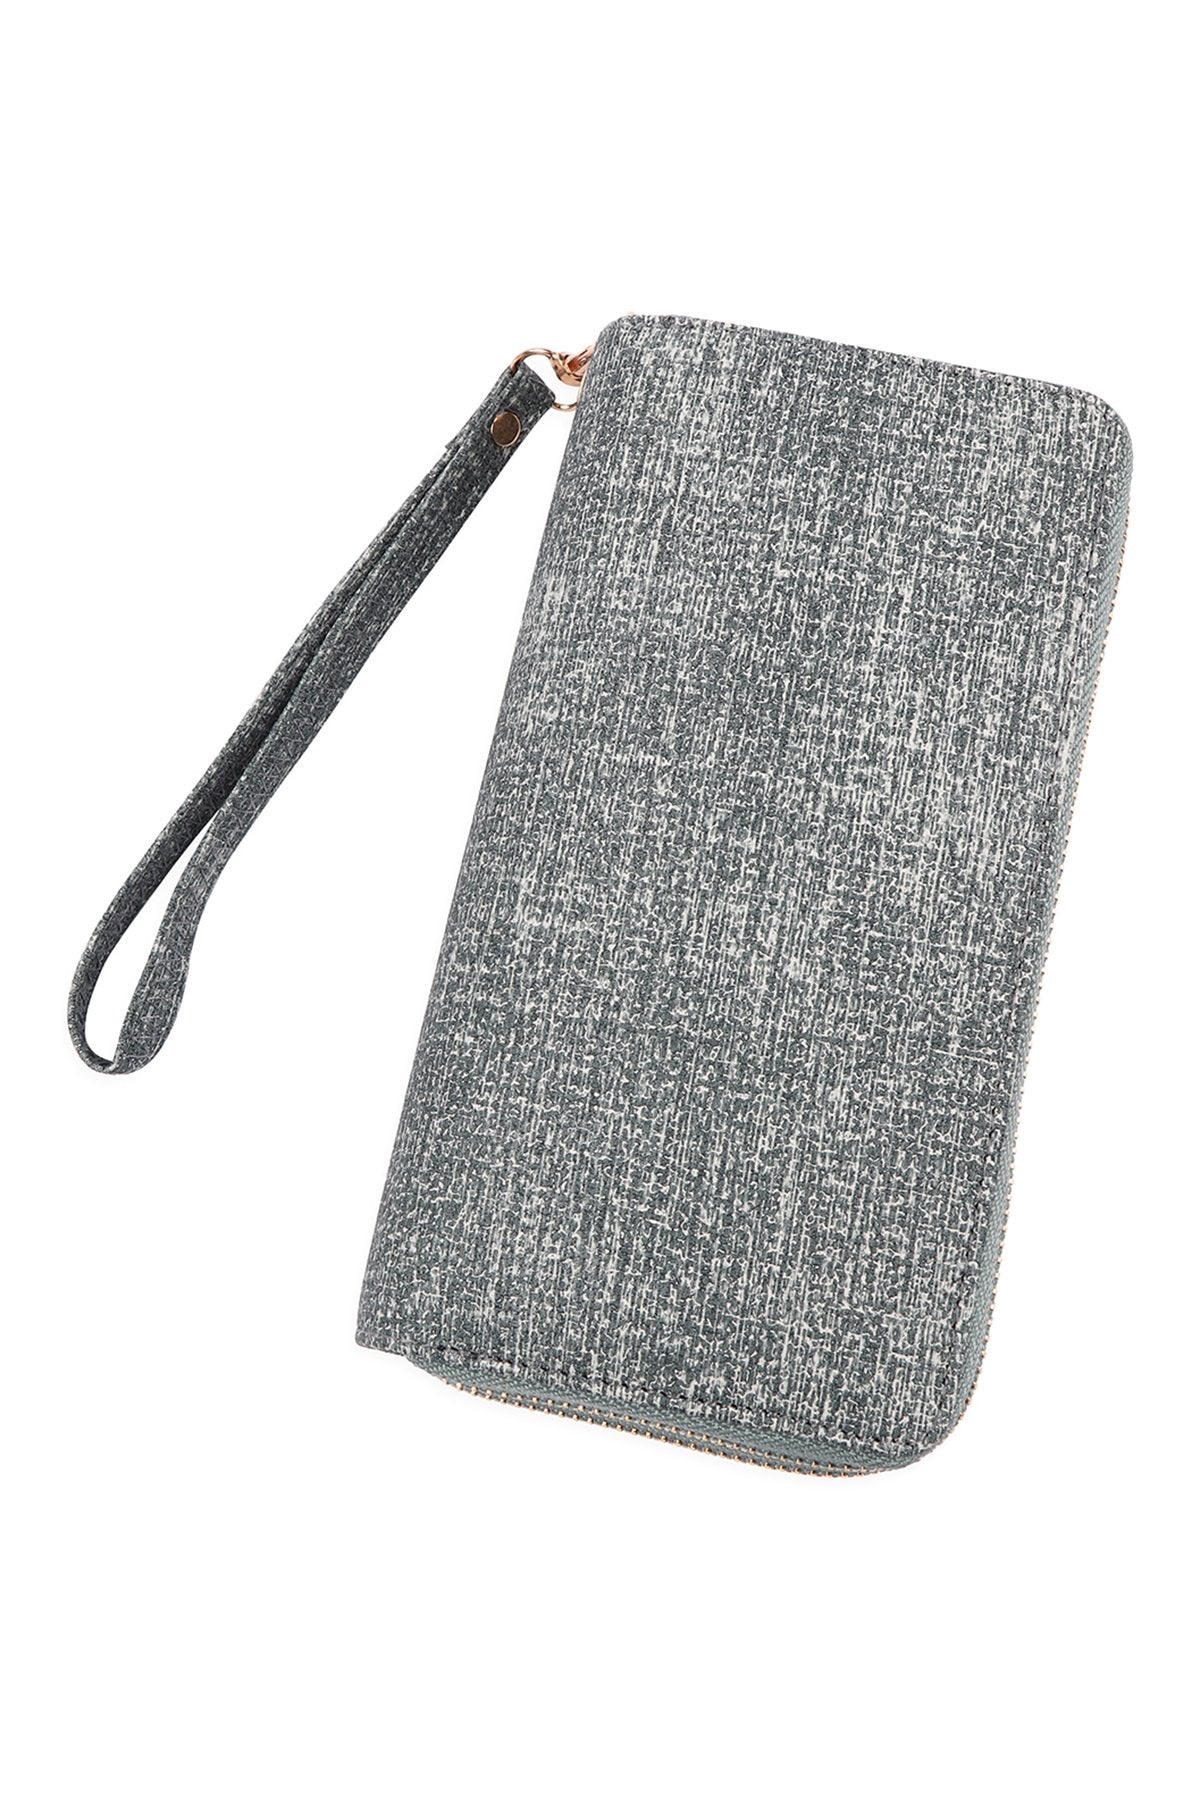 Double Zipper Fashion Wallet-Grey